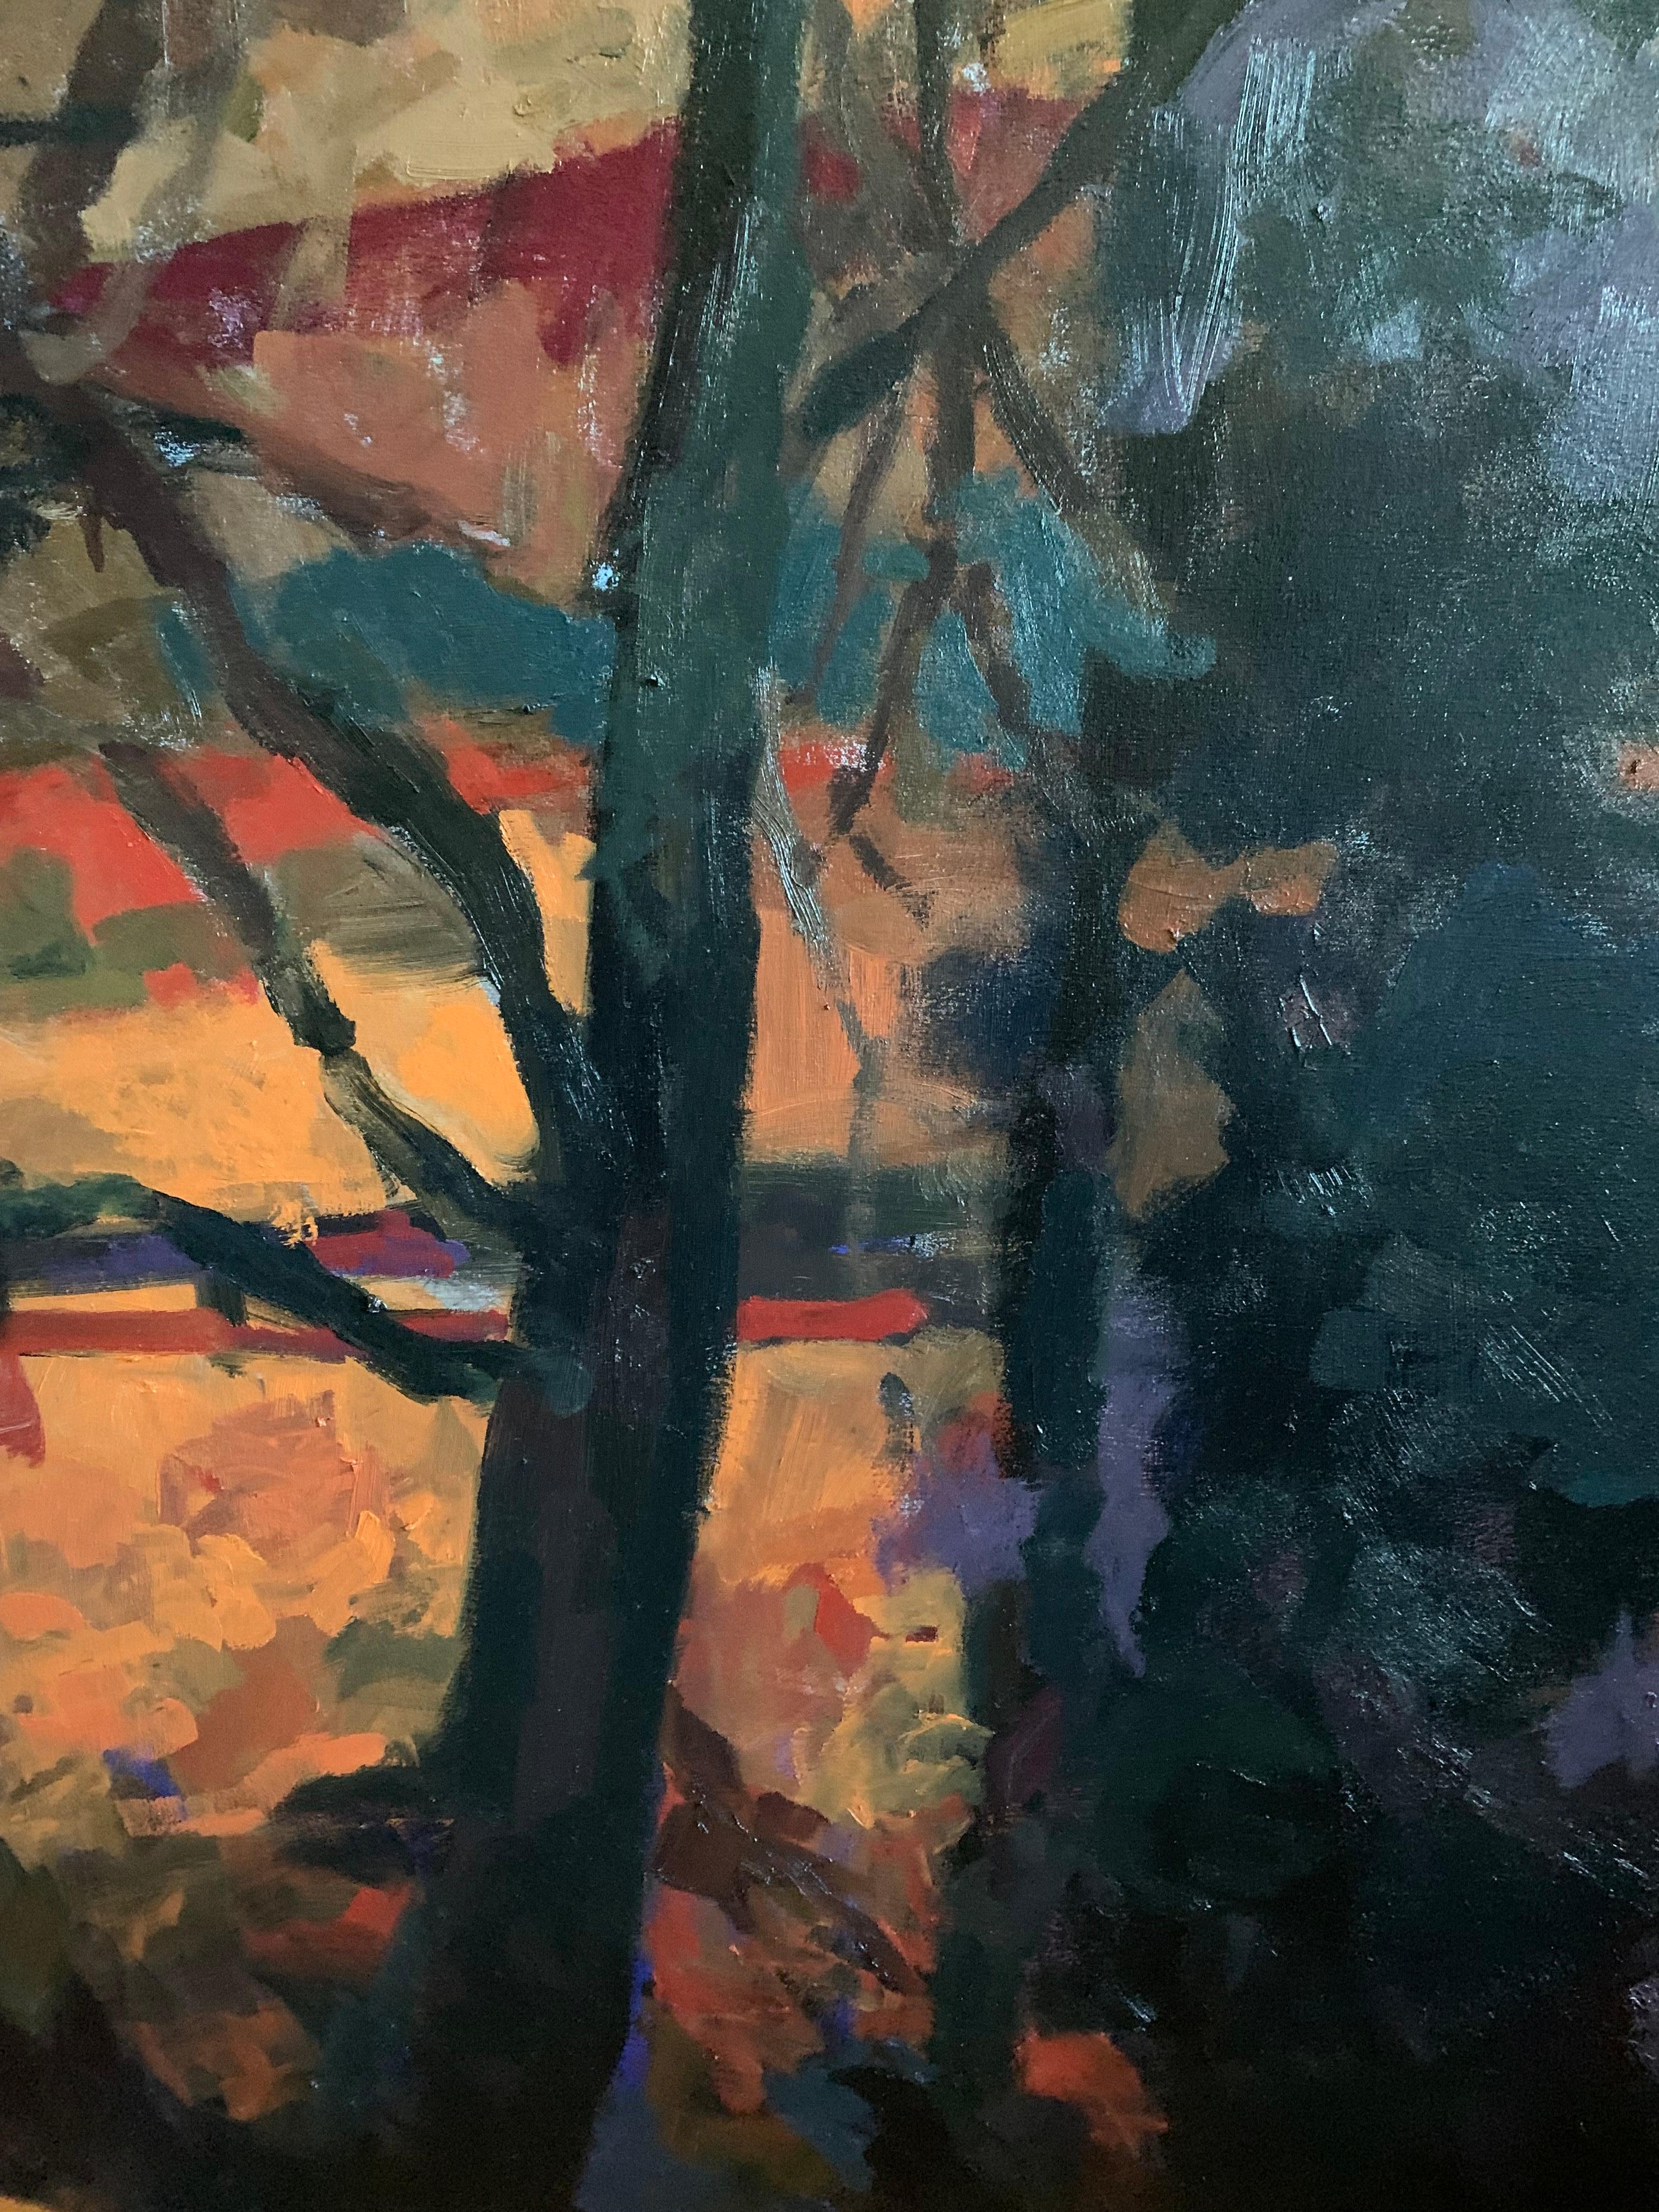 Nightlight I, Original Contemporary Abstract Impressionist Landscape Painting
48